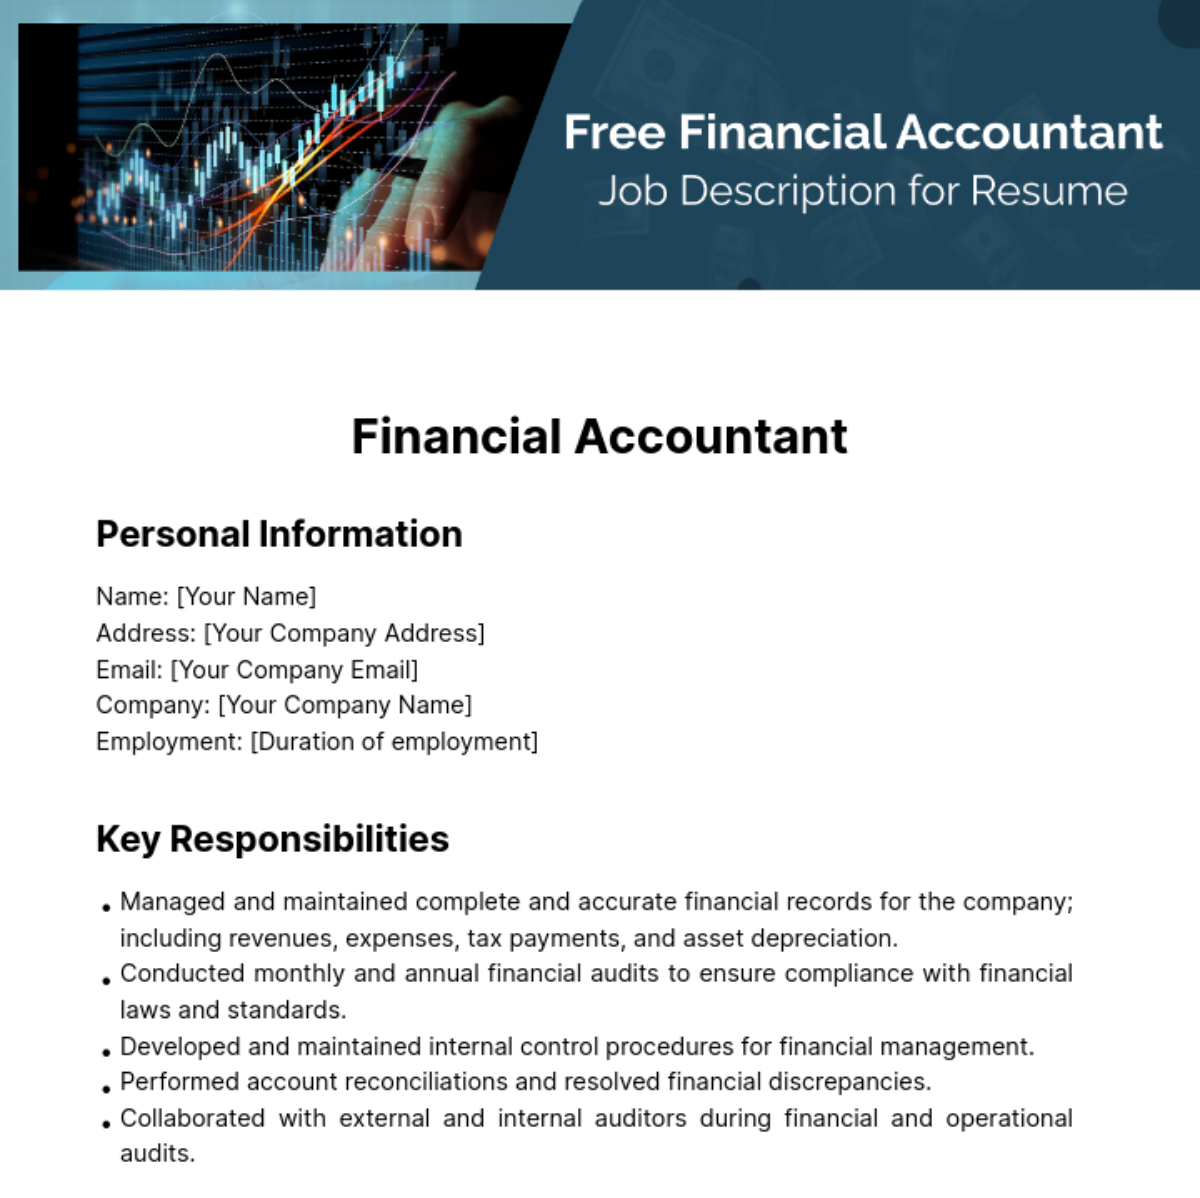 Financial Accountant Job Description for Resume Template